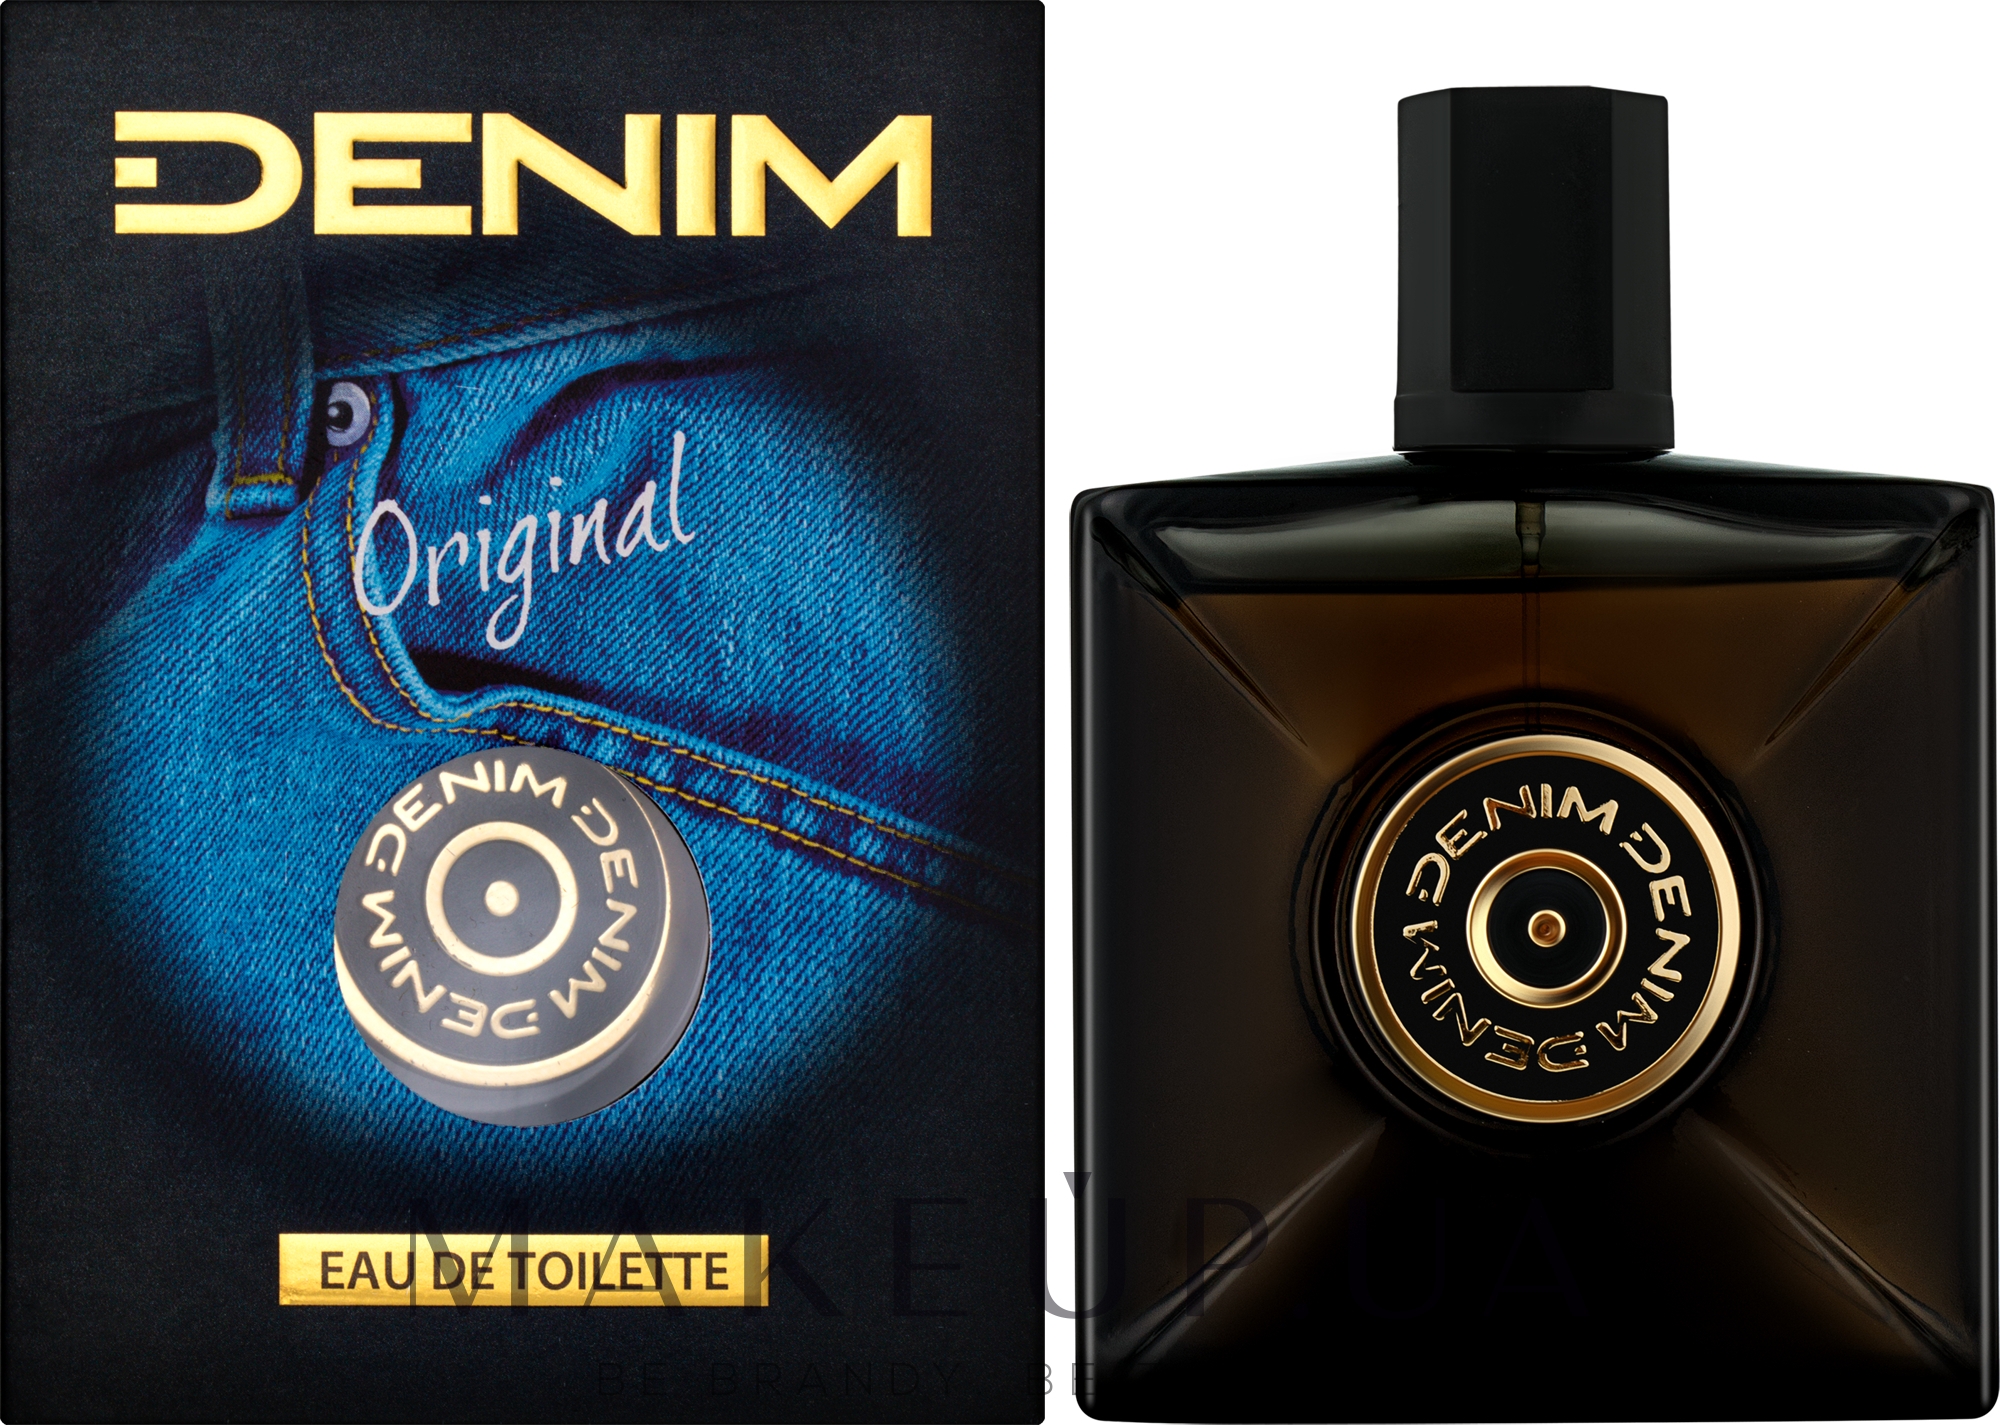 Share more than 125 denim original perfume best